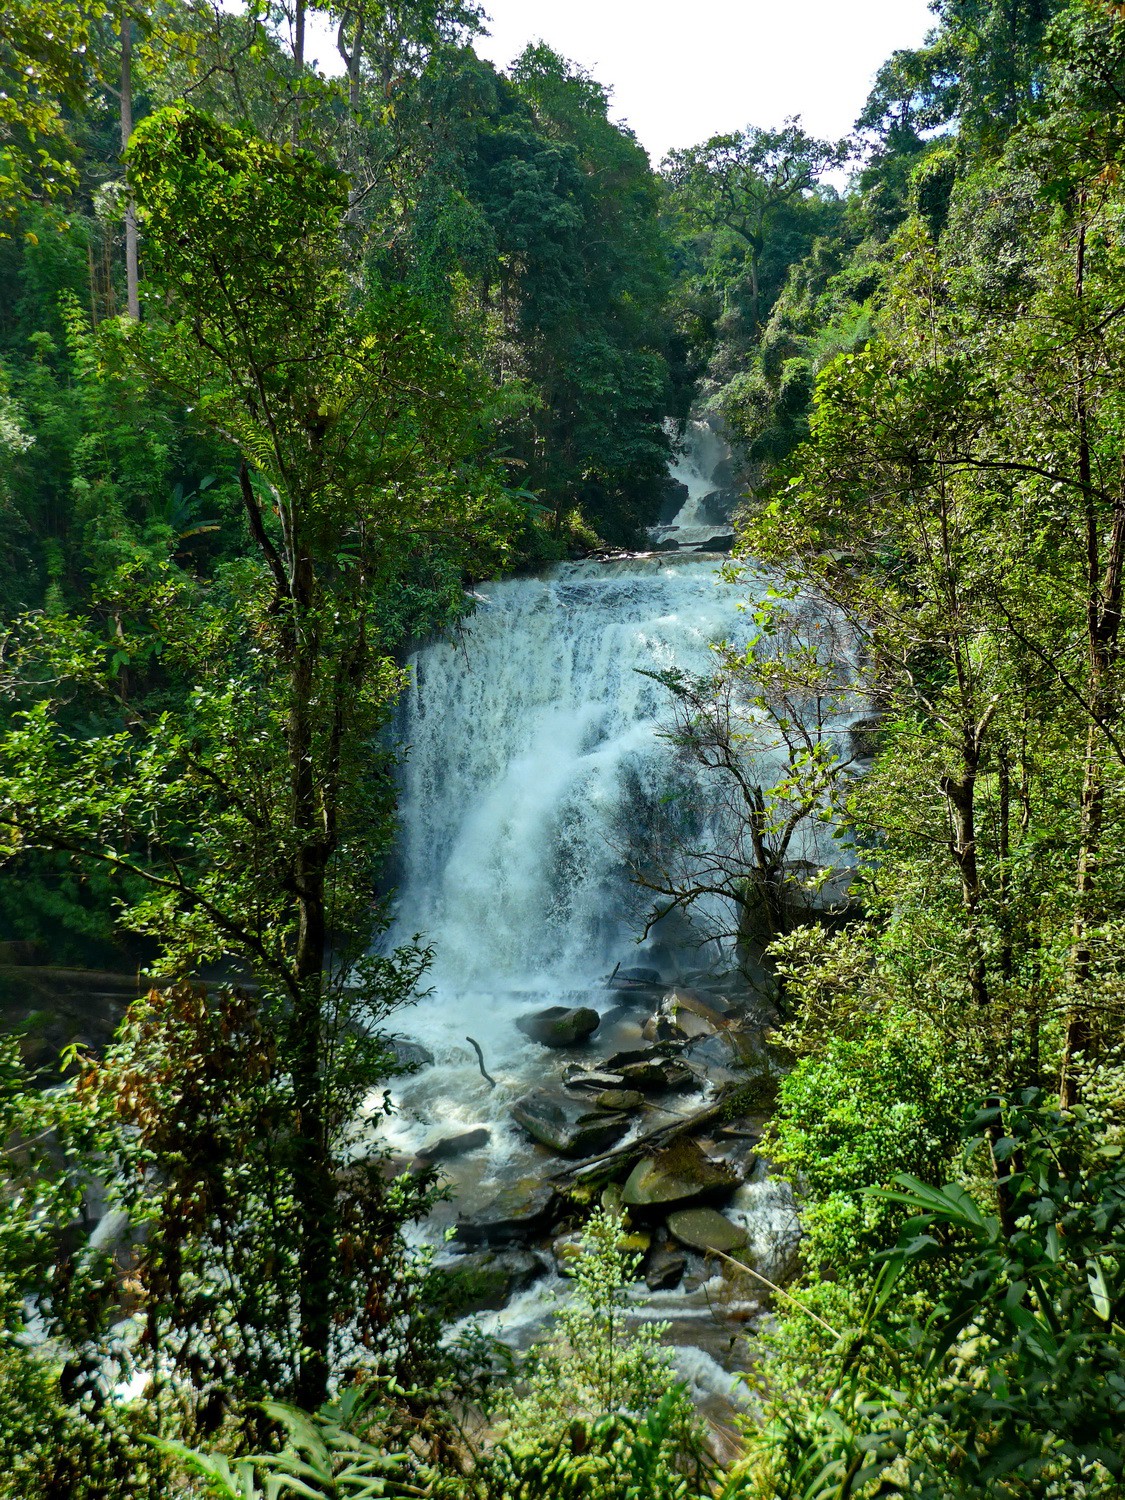 Sirithan waterfall on foot of the mountain Doi Inthanon